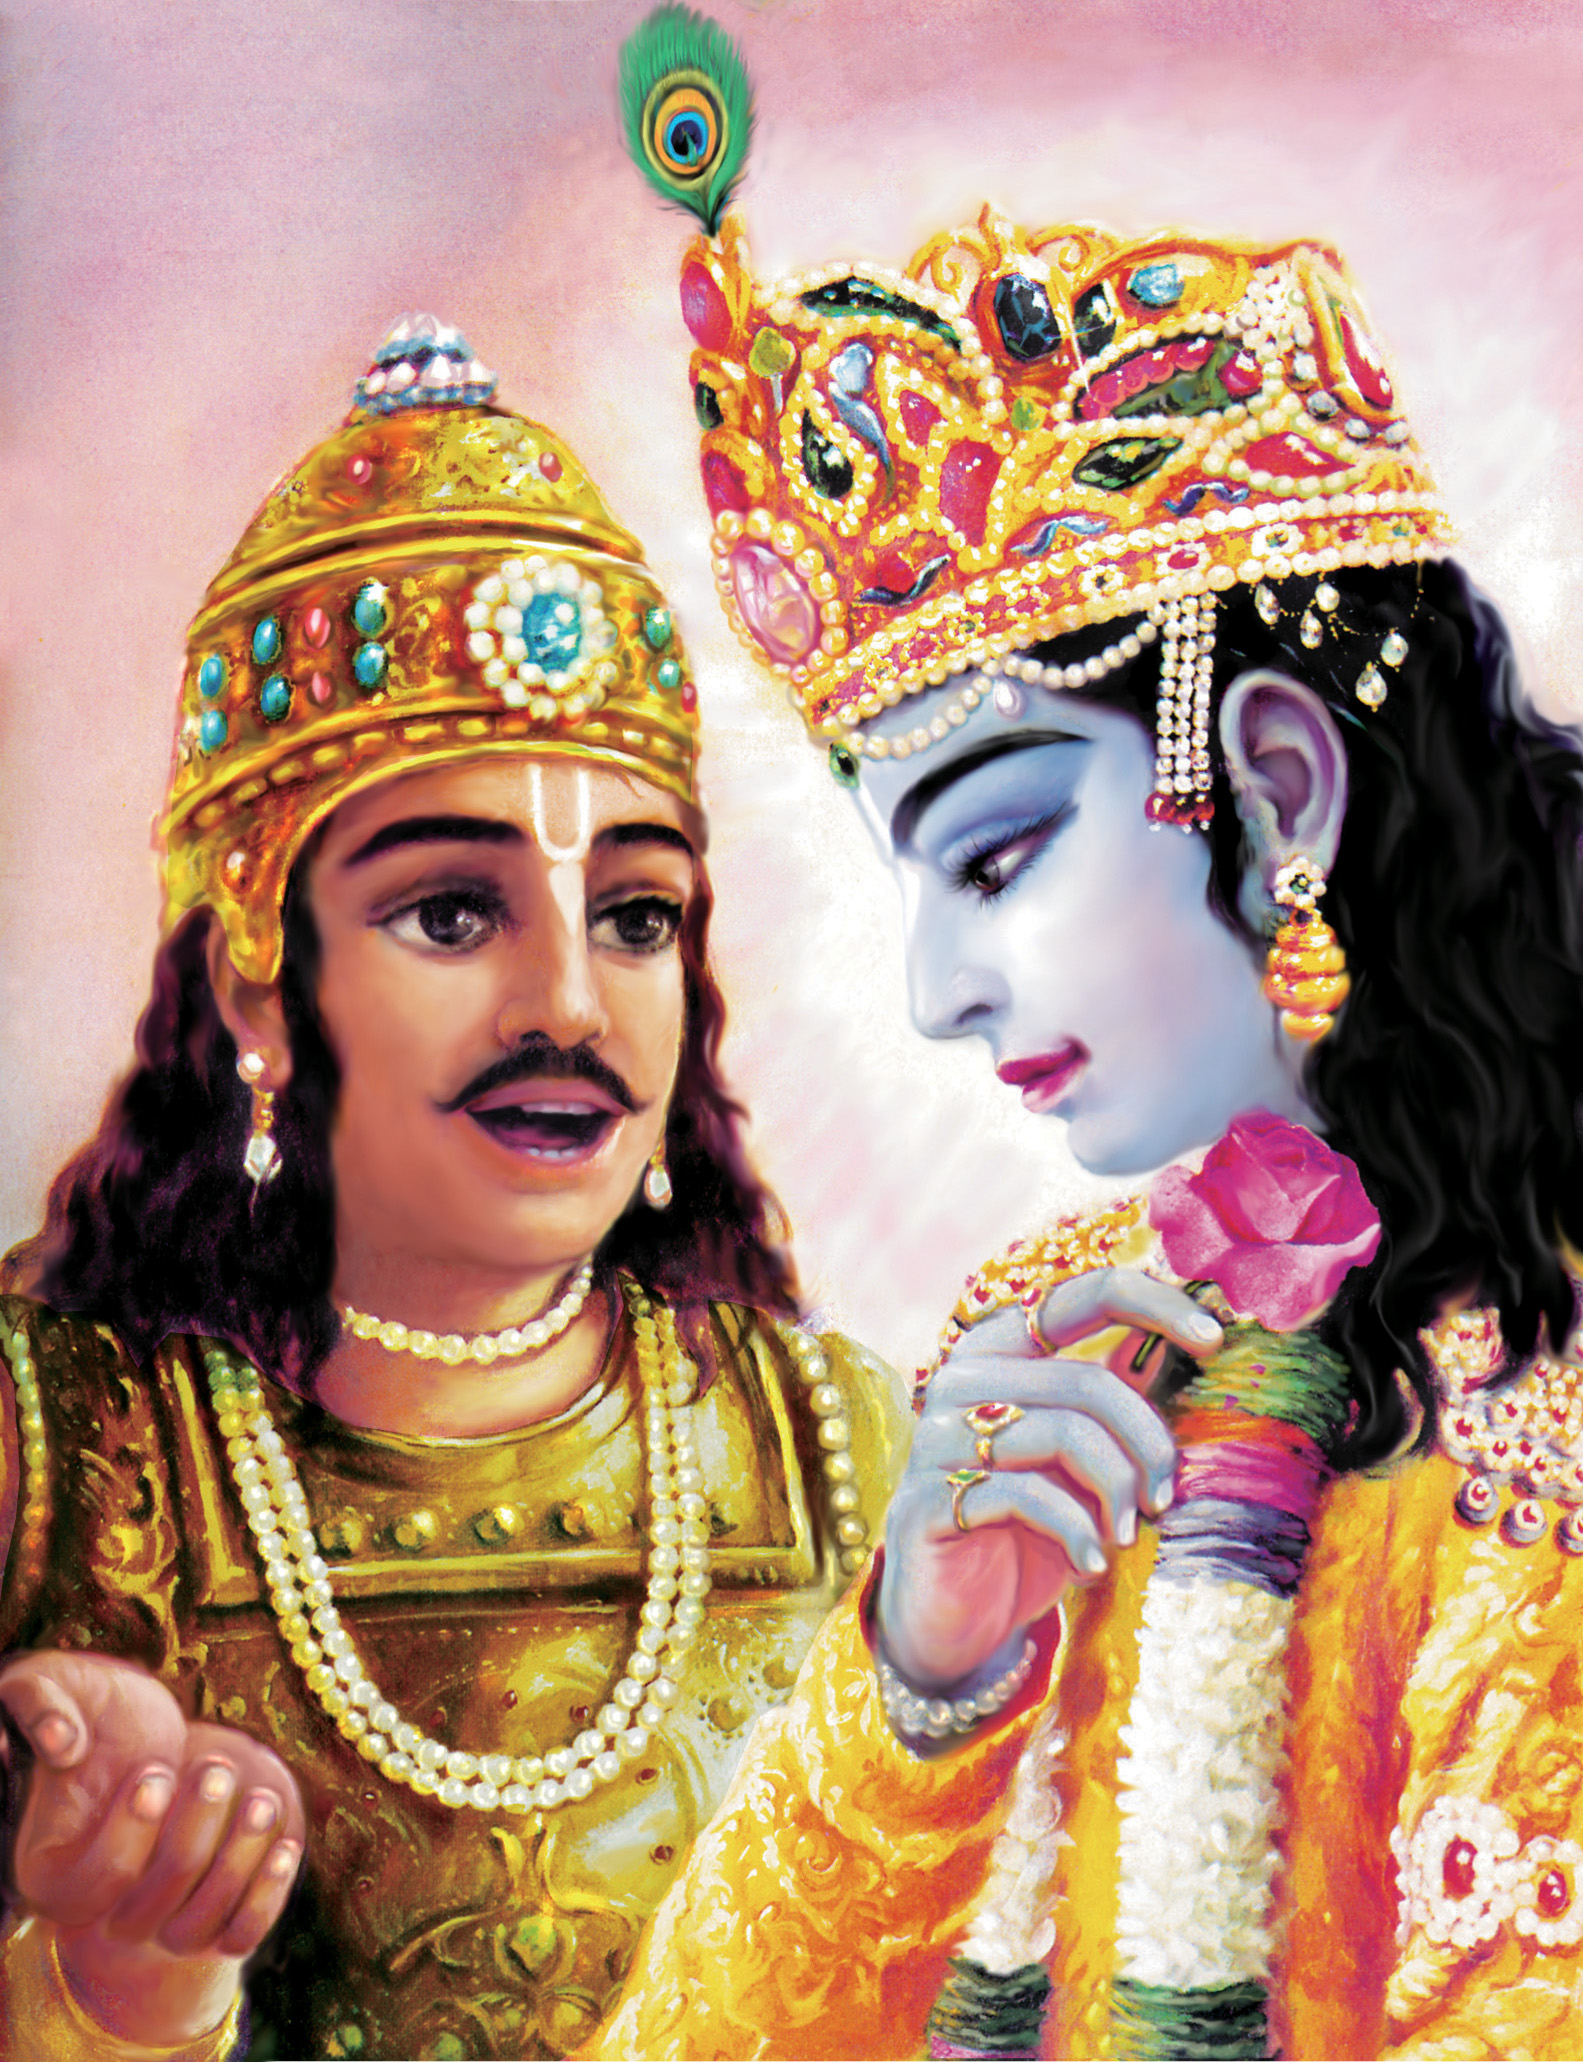 Bhagavad Gita: Arjuna addressed Krishna: You are the Supreme Brahman, the ultimate, the supreme abode and purifier.